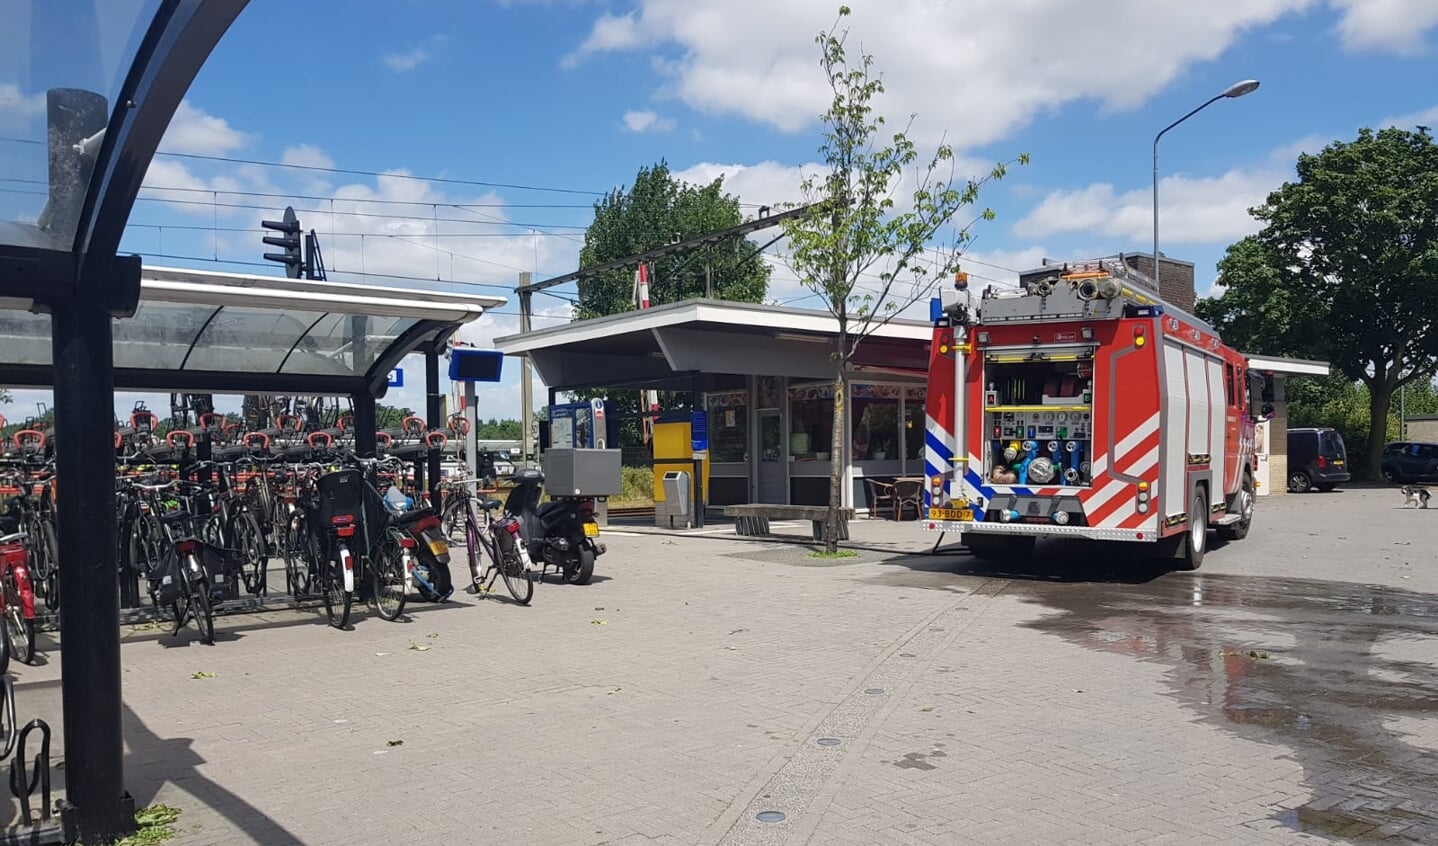 De brandweer op het station in Ravenstein. (Foto: Maickel Keijzers / Hendriks Multimedia)